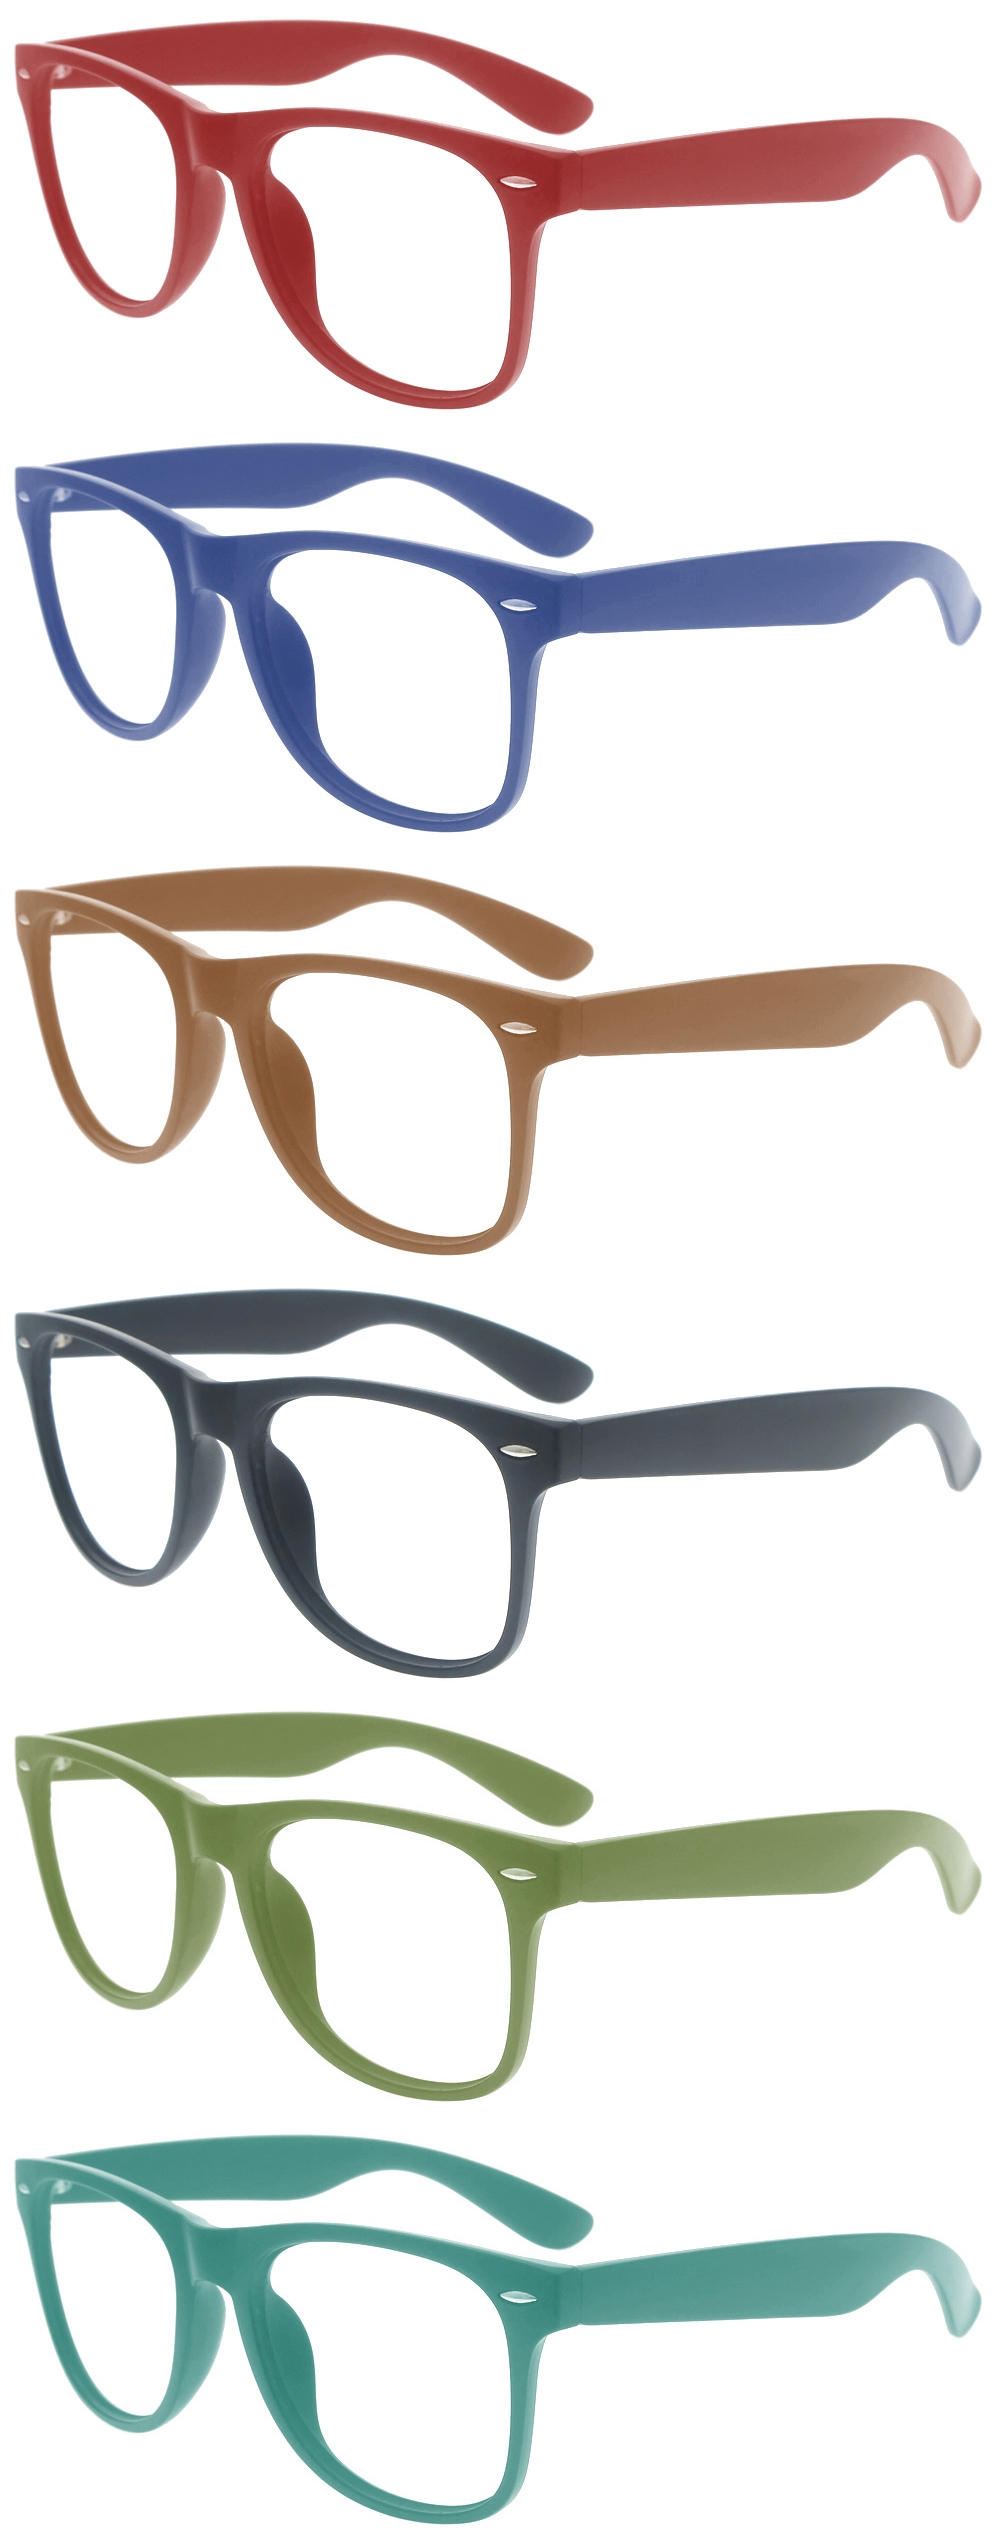 Dachuan Optical DSP348003 China Supplier Trendy Wayfarer Plastic Sunglasses With Metal Hinge (2)